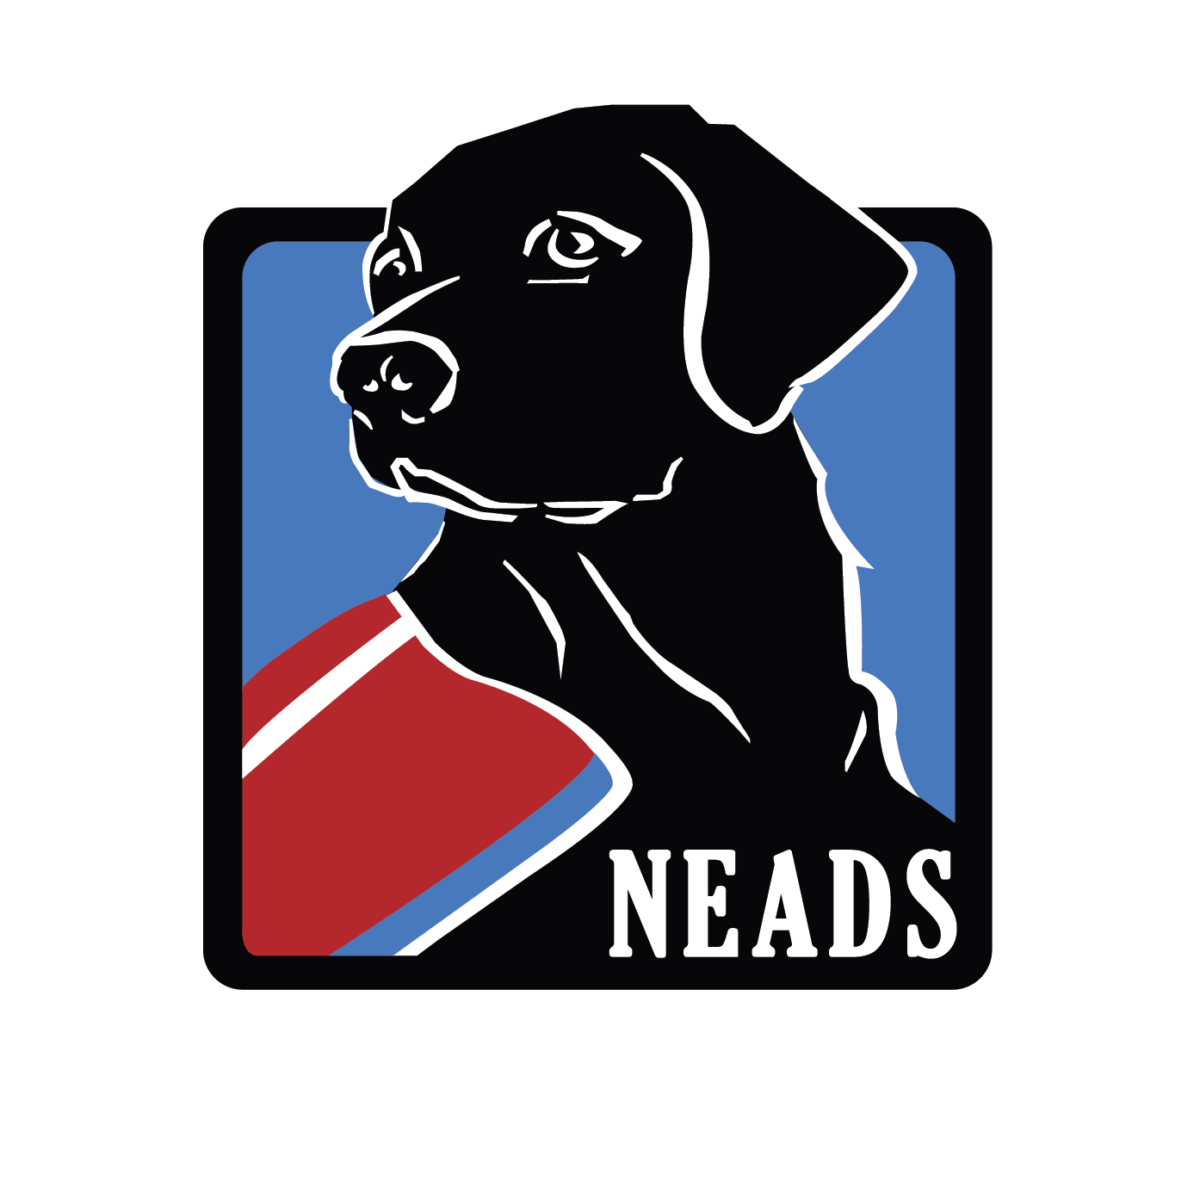 NEADS logo